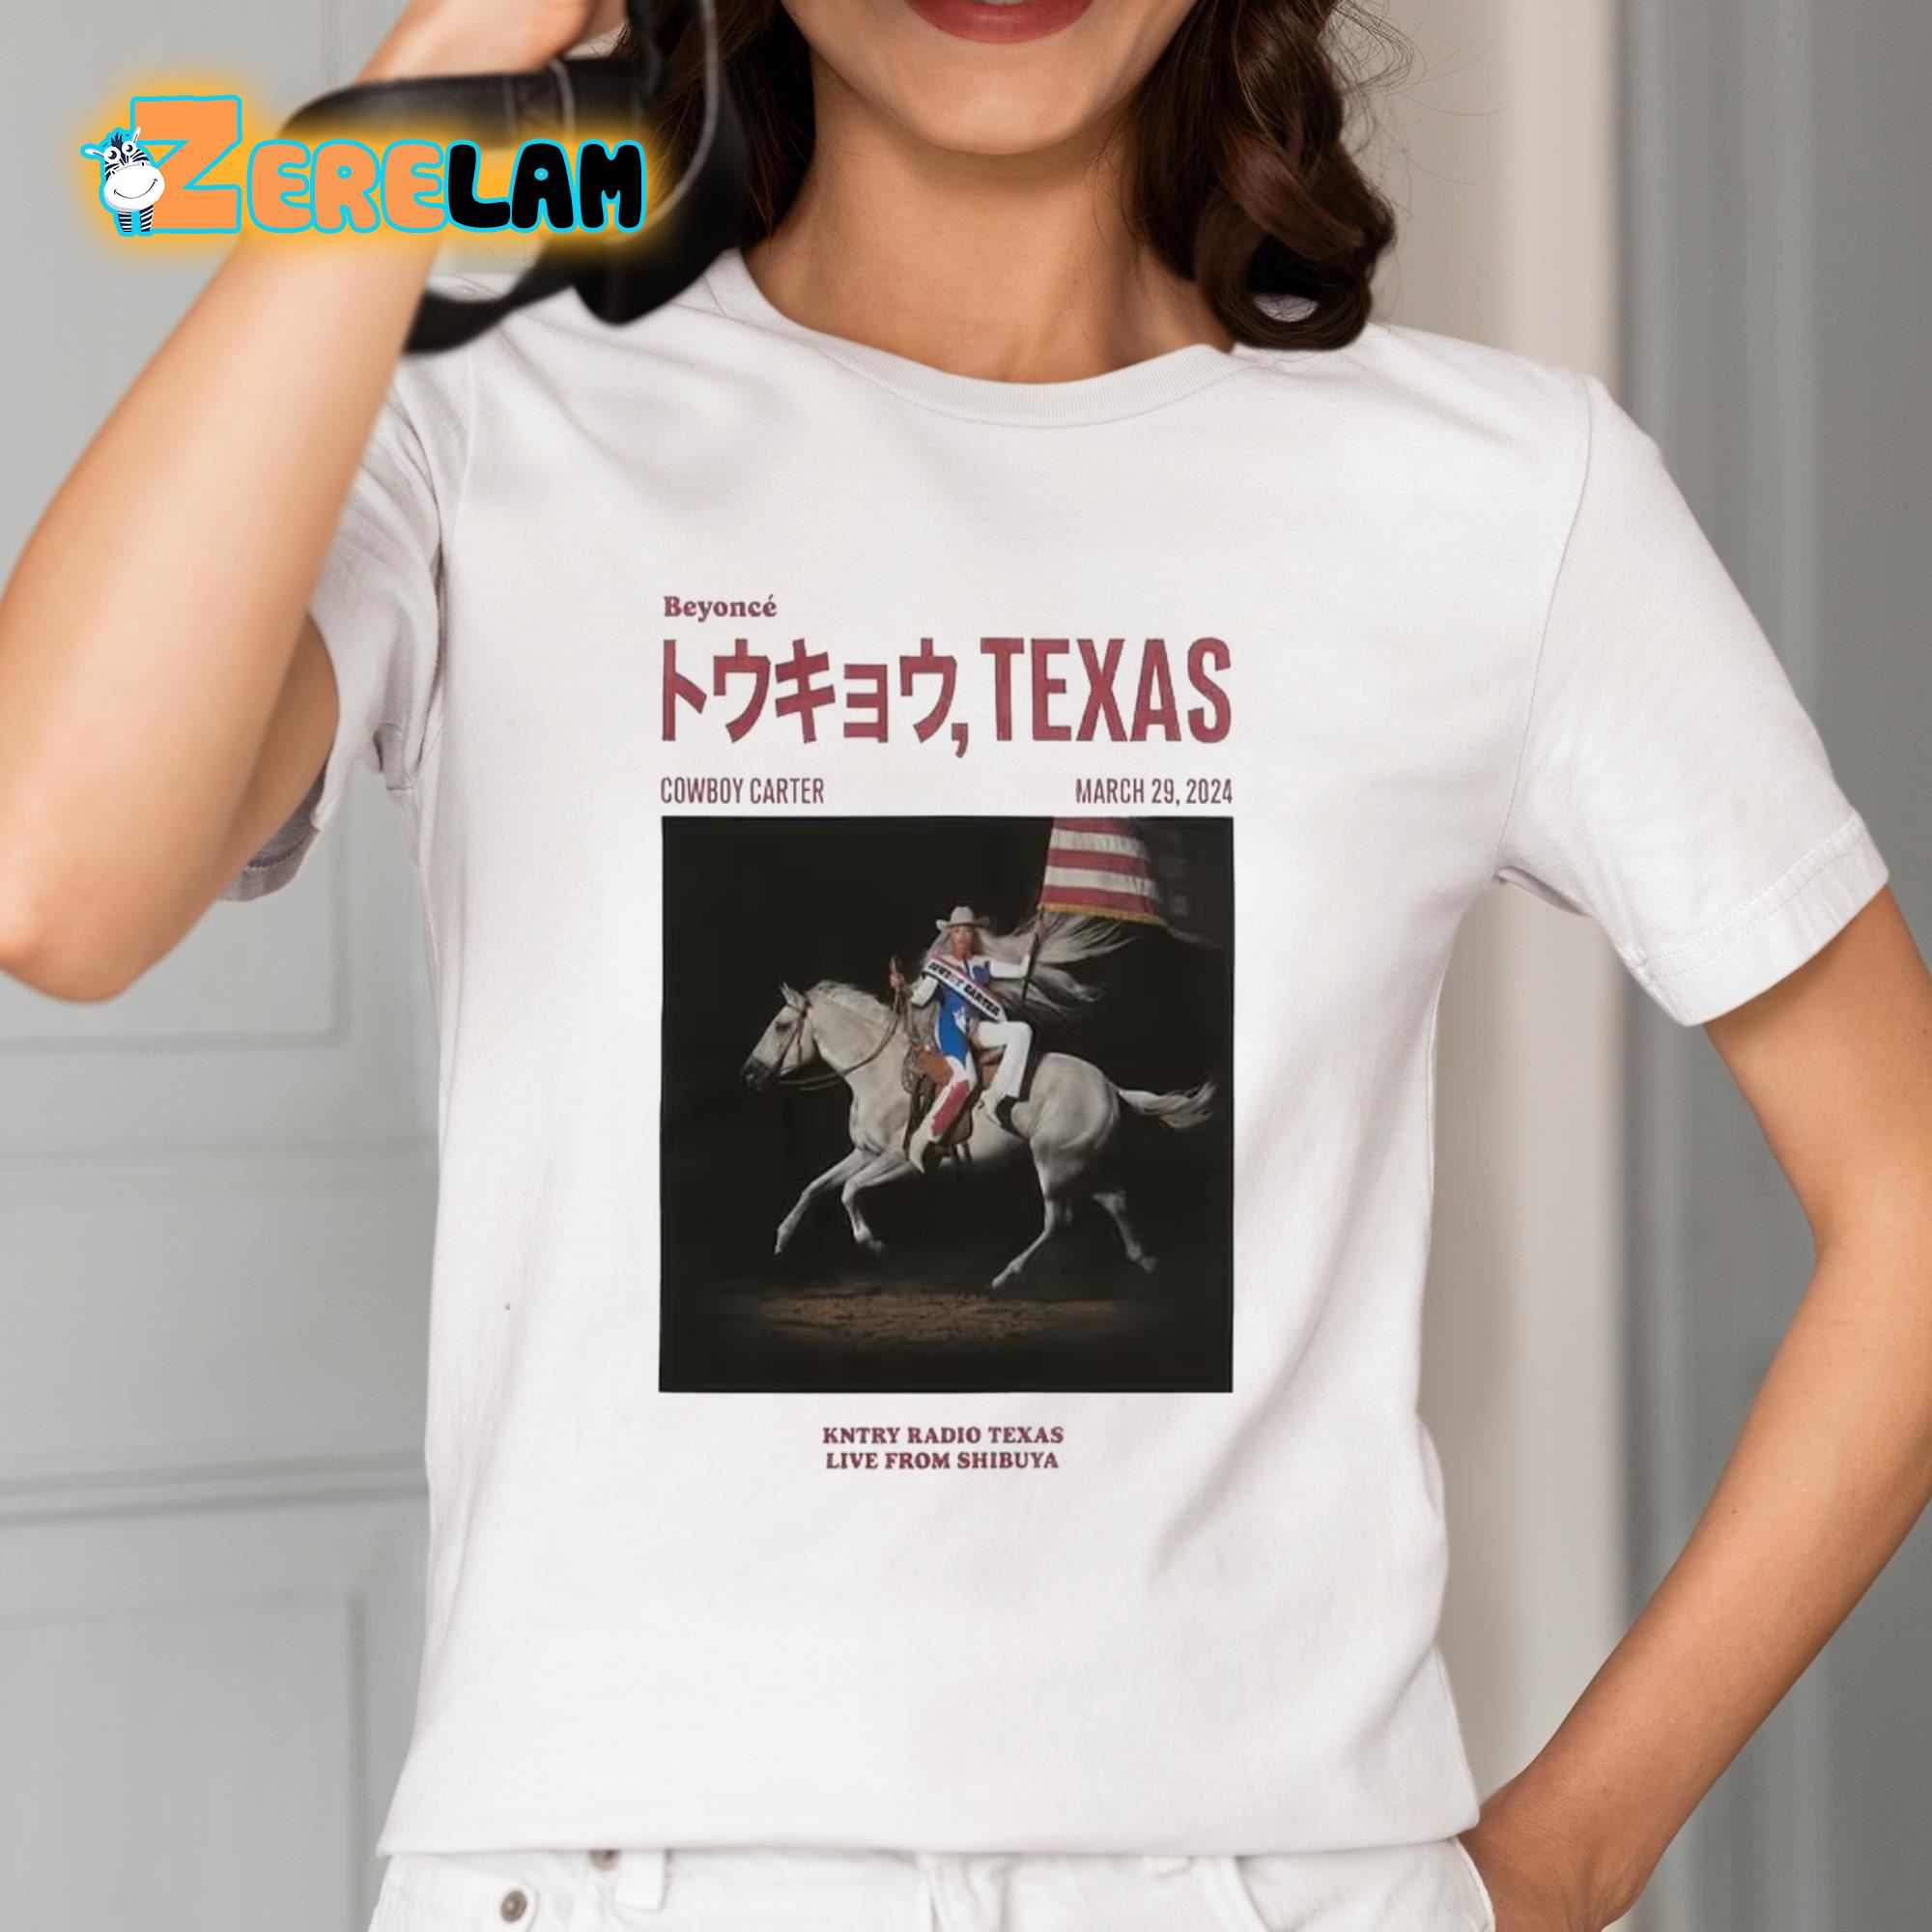 Beyonce Cowboy Carter Texas Kntry Radio Texas Live From Shibuya Shirt 12 1